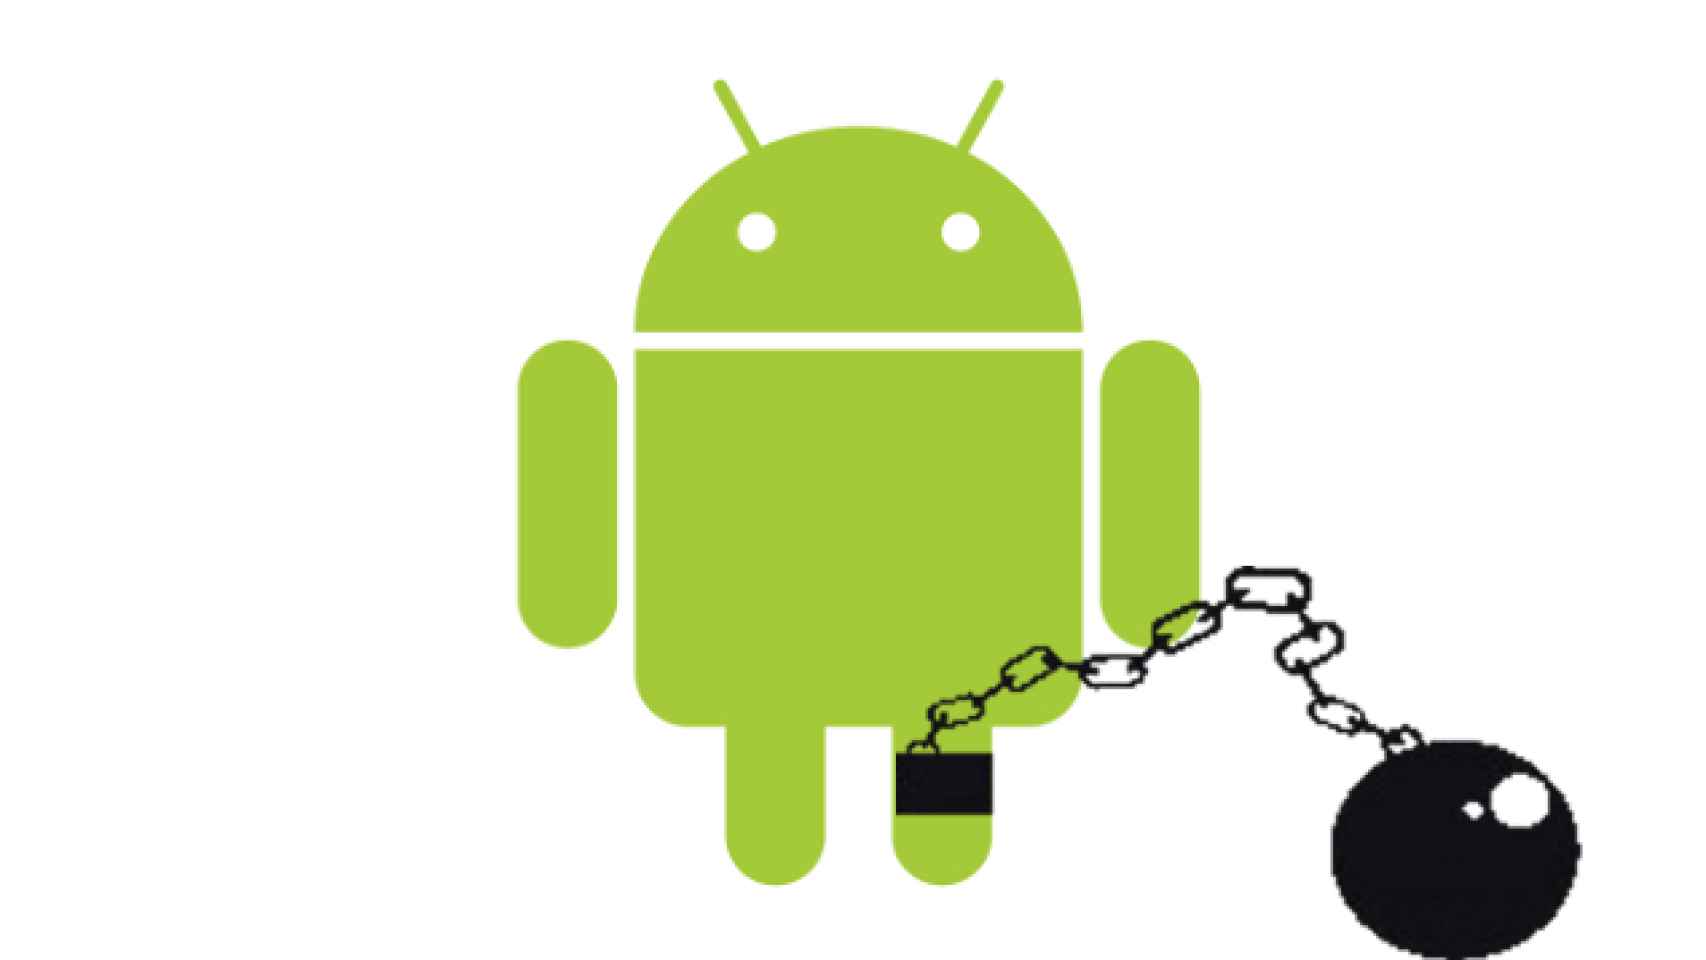 ¿Cómo afectaría a Android la prohibición de liberar teléfonos móviles?